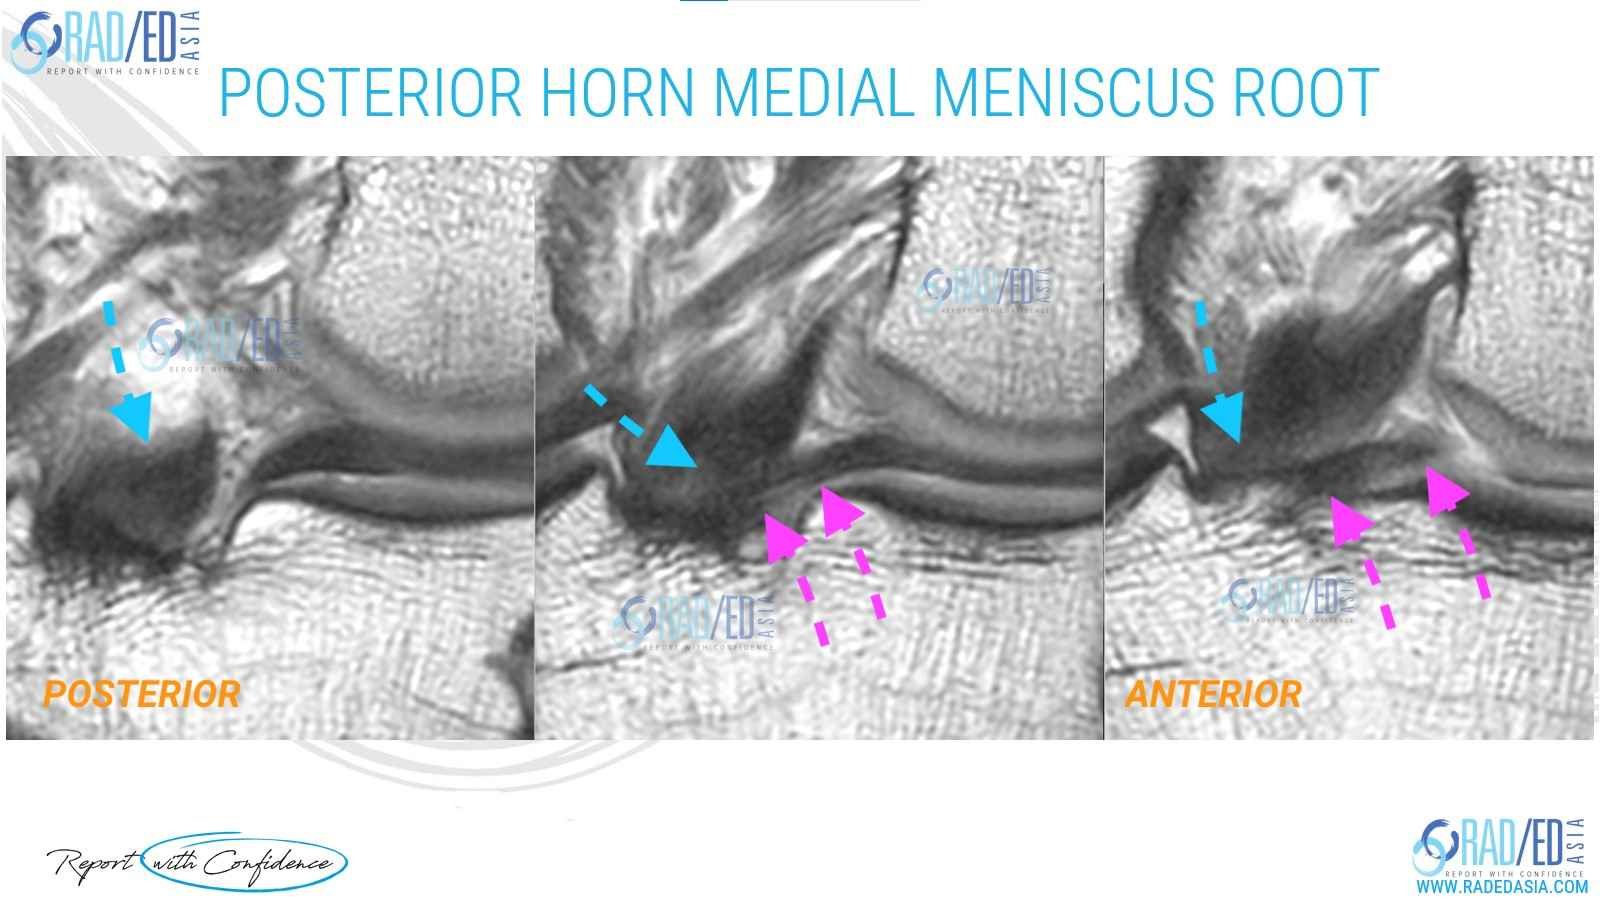 mri knee post horn medial meniscus root radedasia